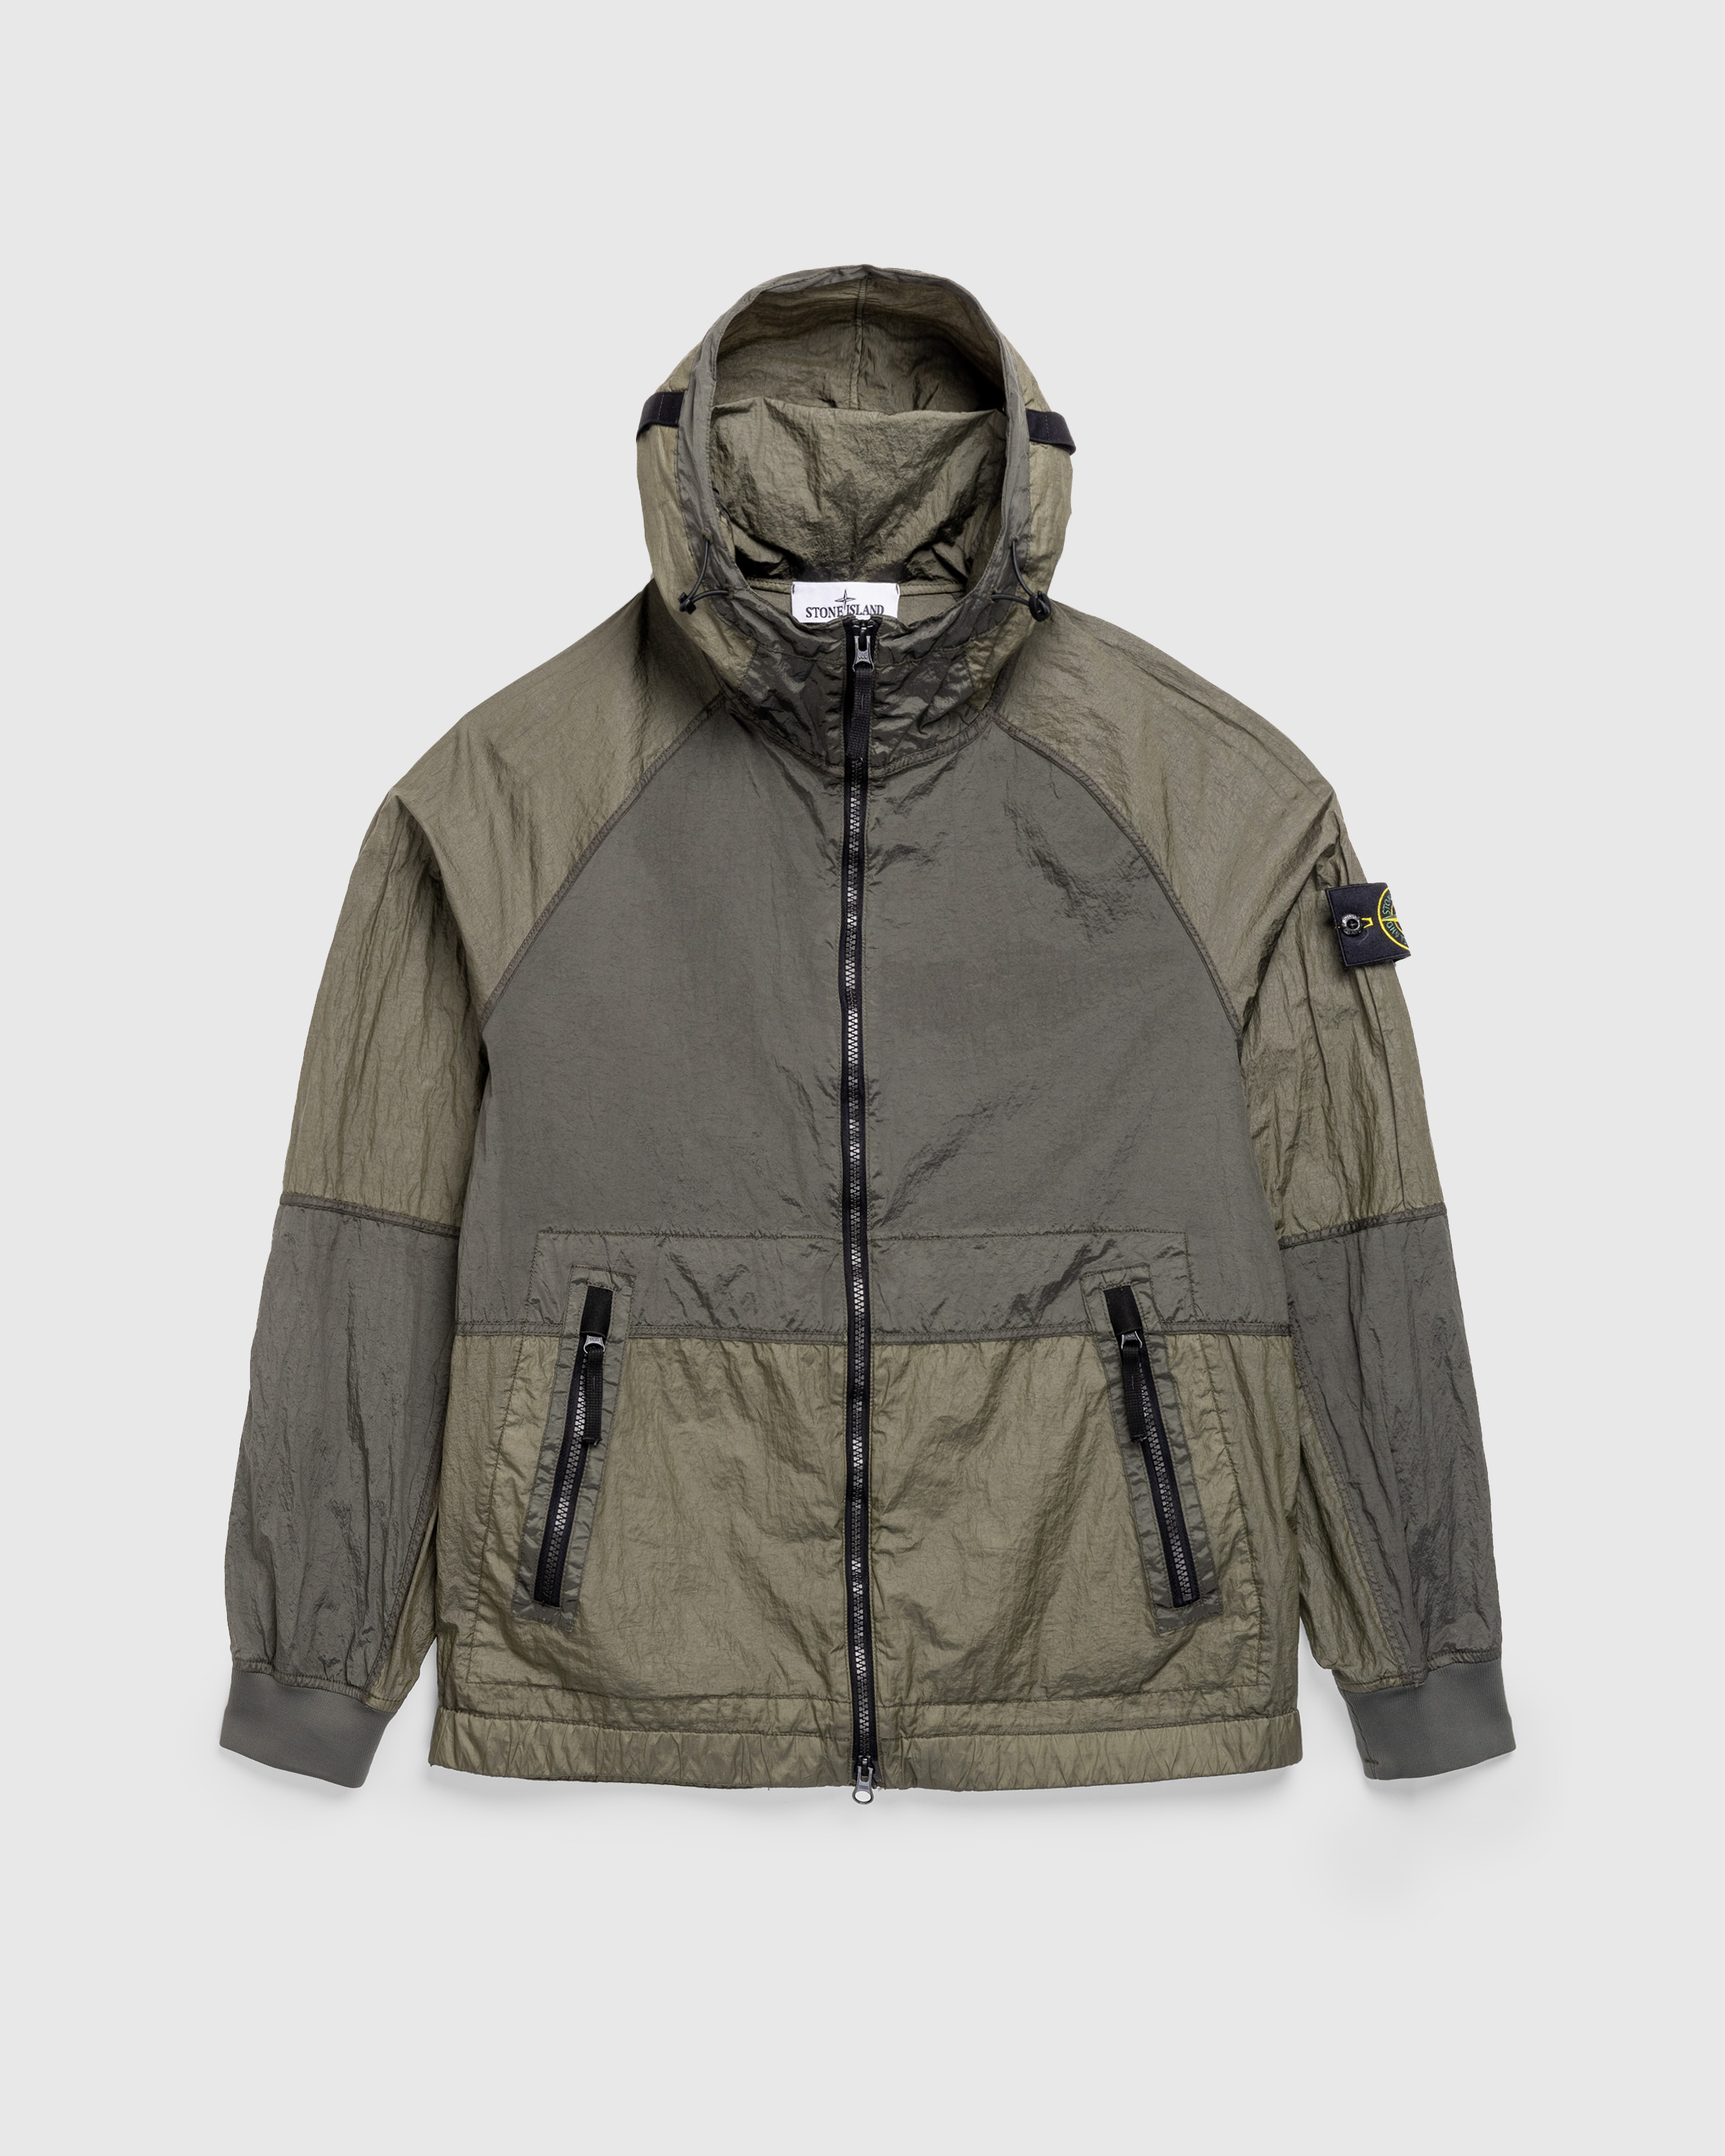 Stone Island – Nylon Metal Hooded Jacket Musk - Outerwear - Green - Image 1